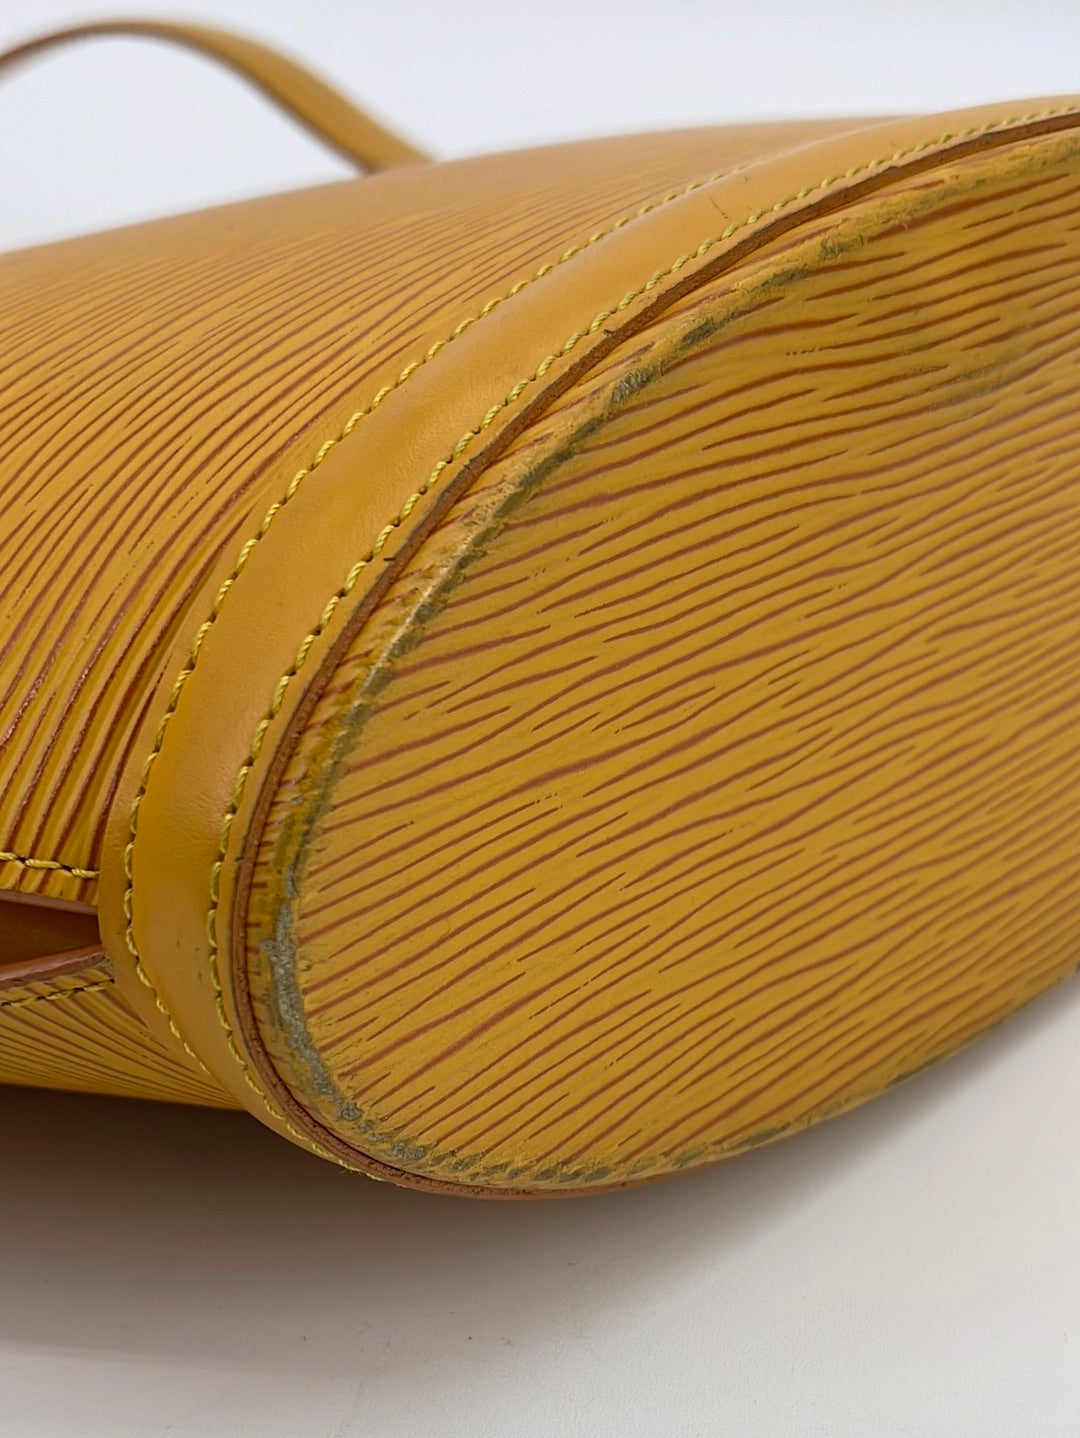 Vintage Louis Vuitton Kenyan Yellow Epi Leather Saint Jacques PM Bag V –  KimmieBBags LLC